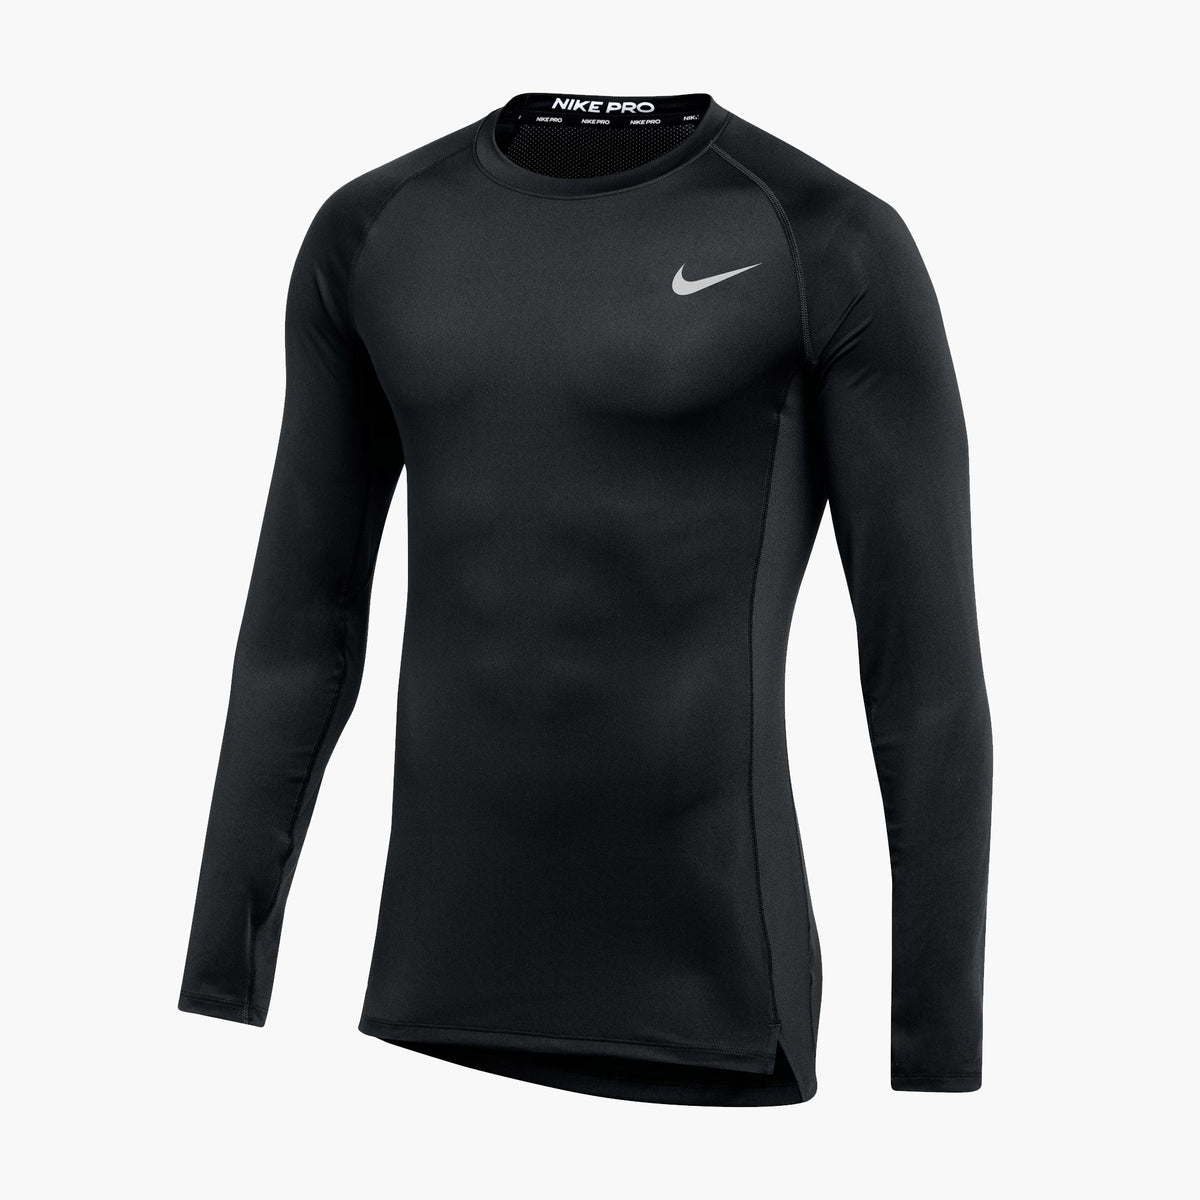 Nike Pro Tight Black Long Sleeve Training Top Men's - Niky's Sports